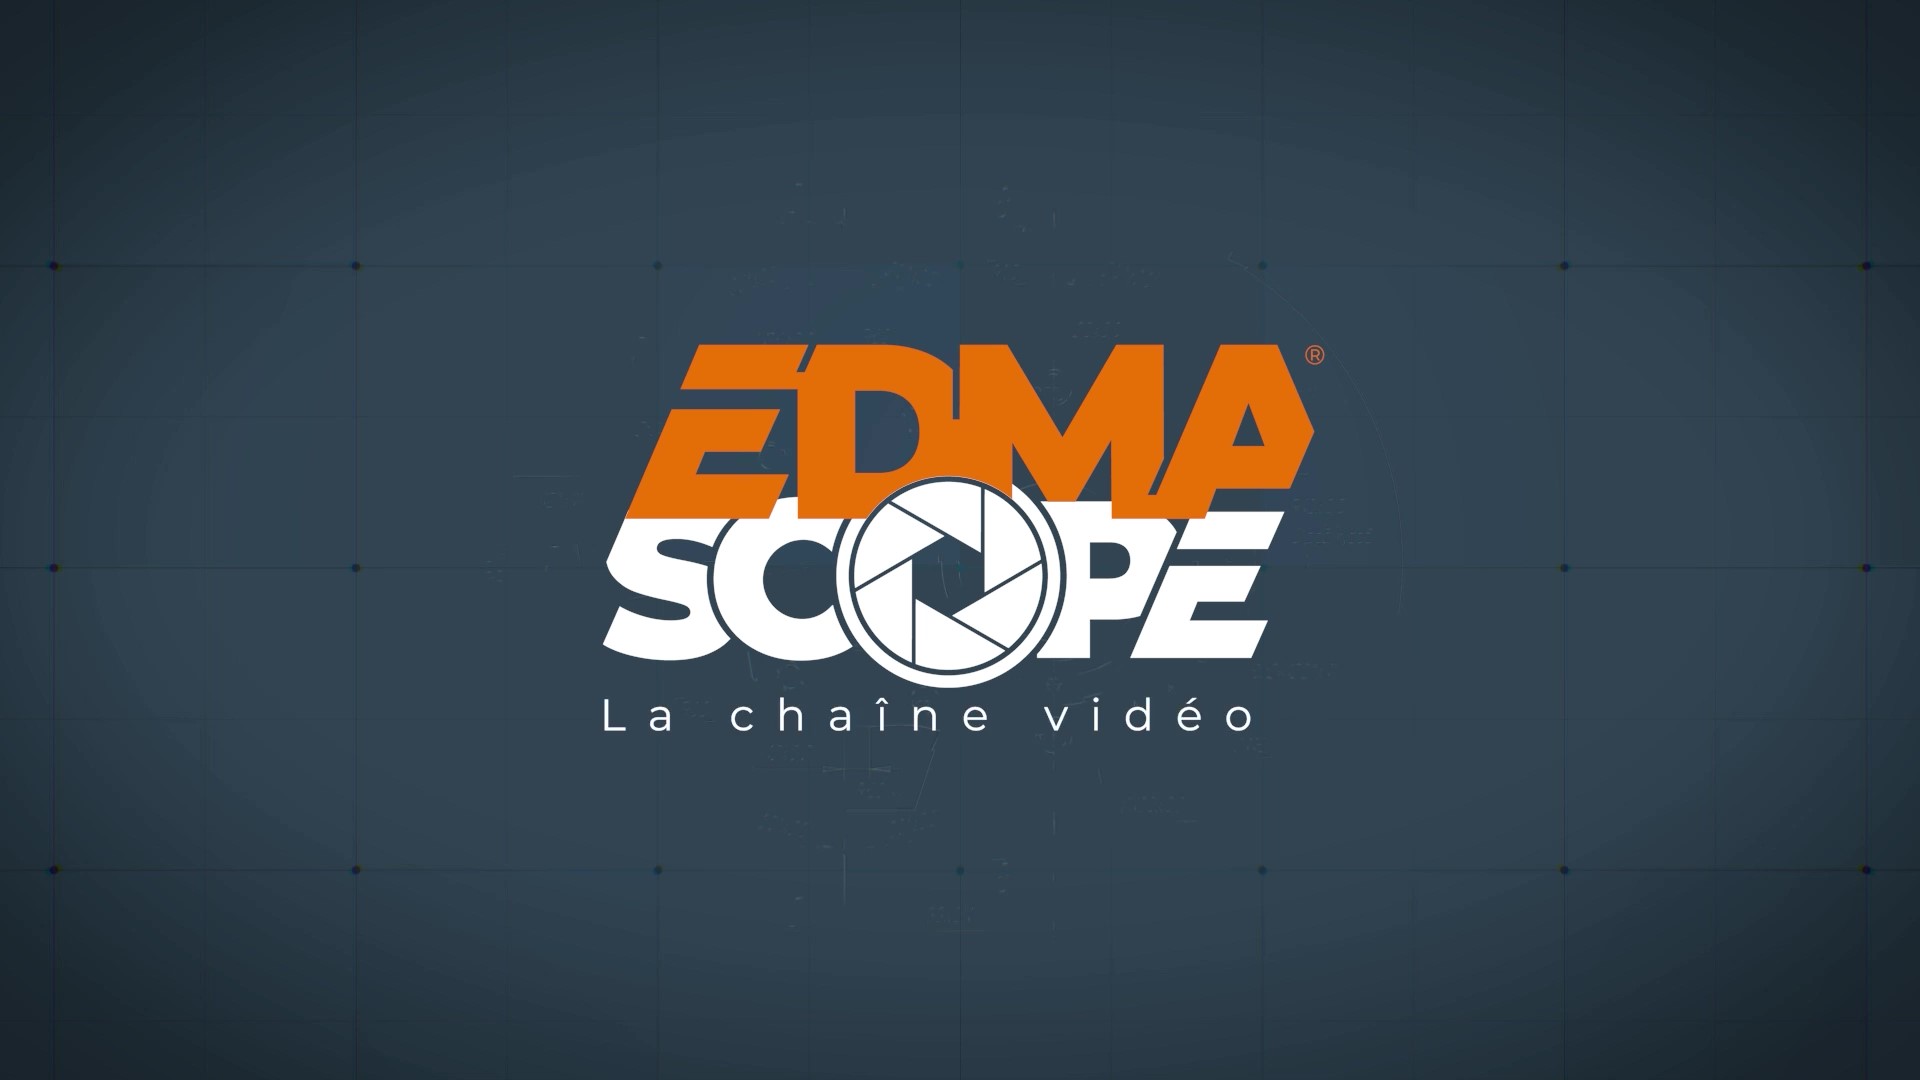 Neue Video-Serie EDMASCOPE